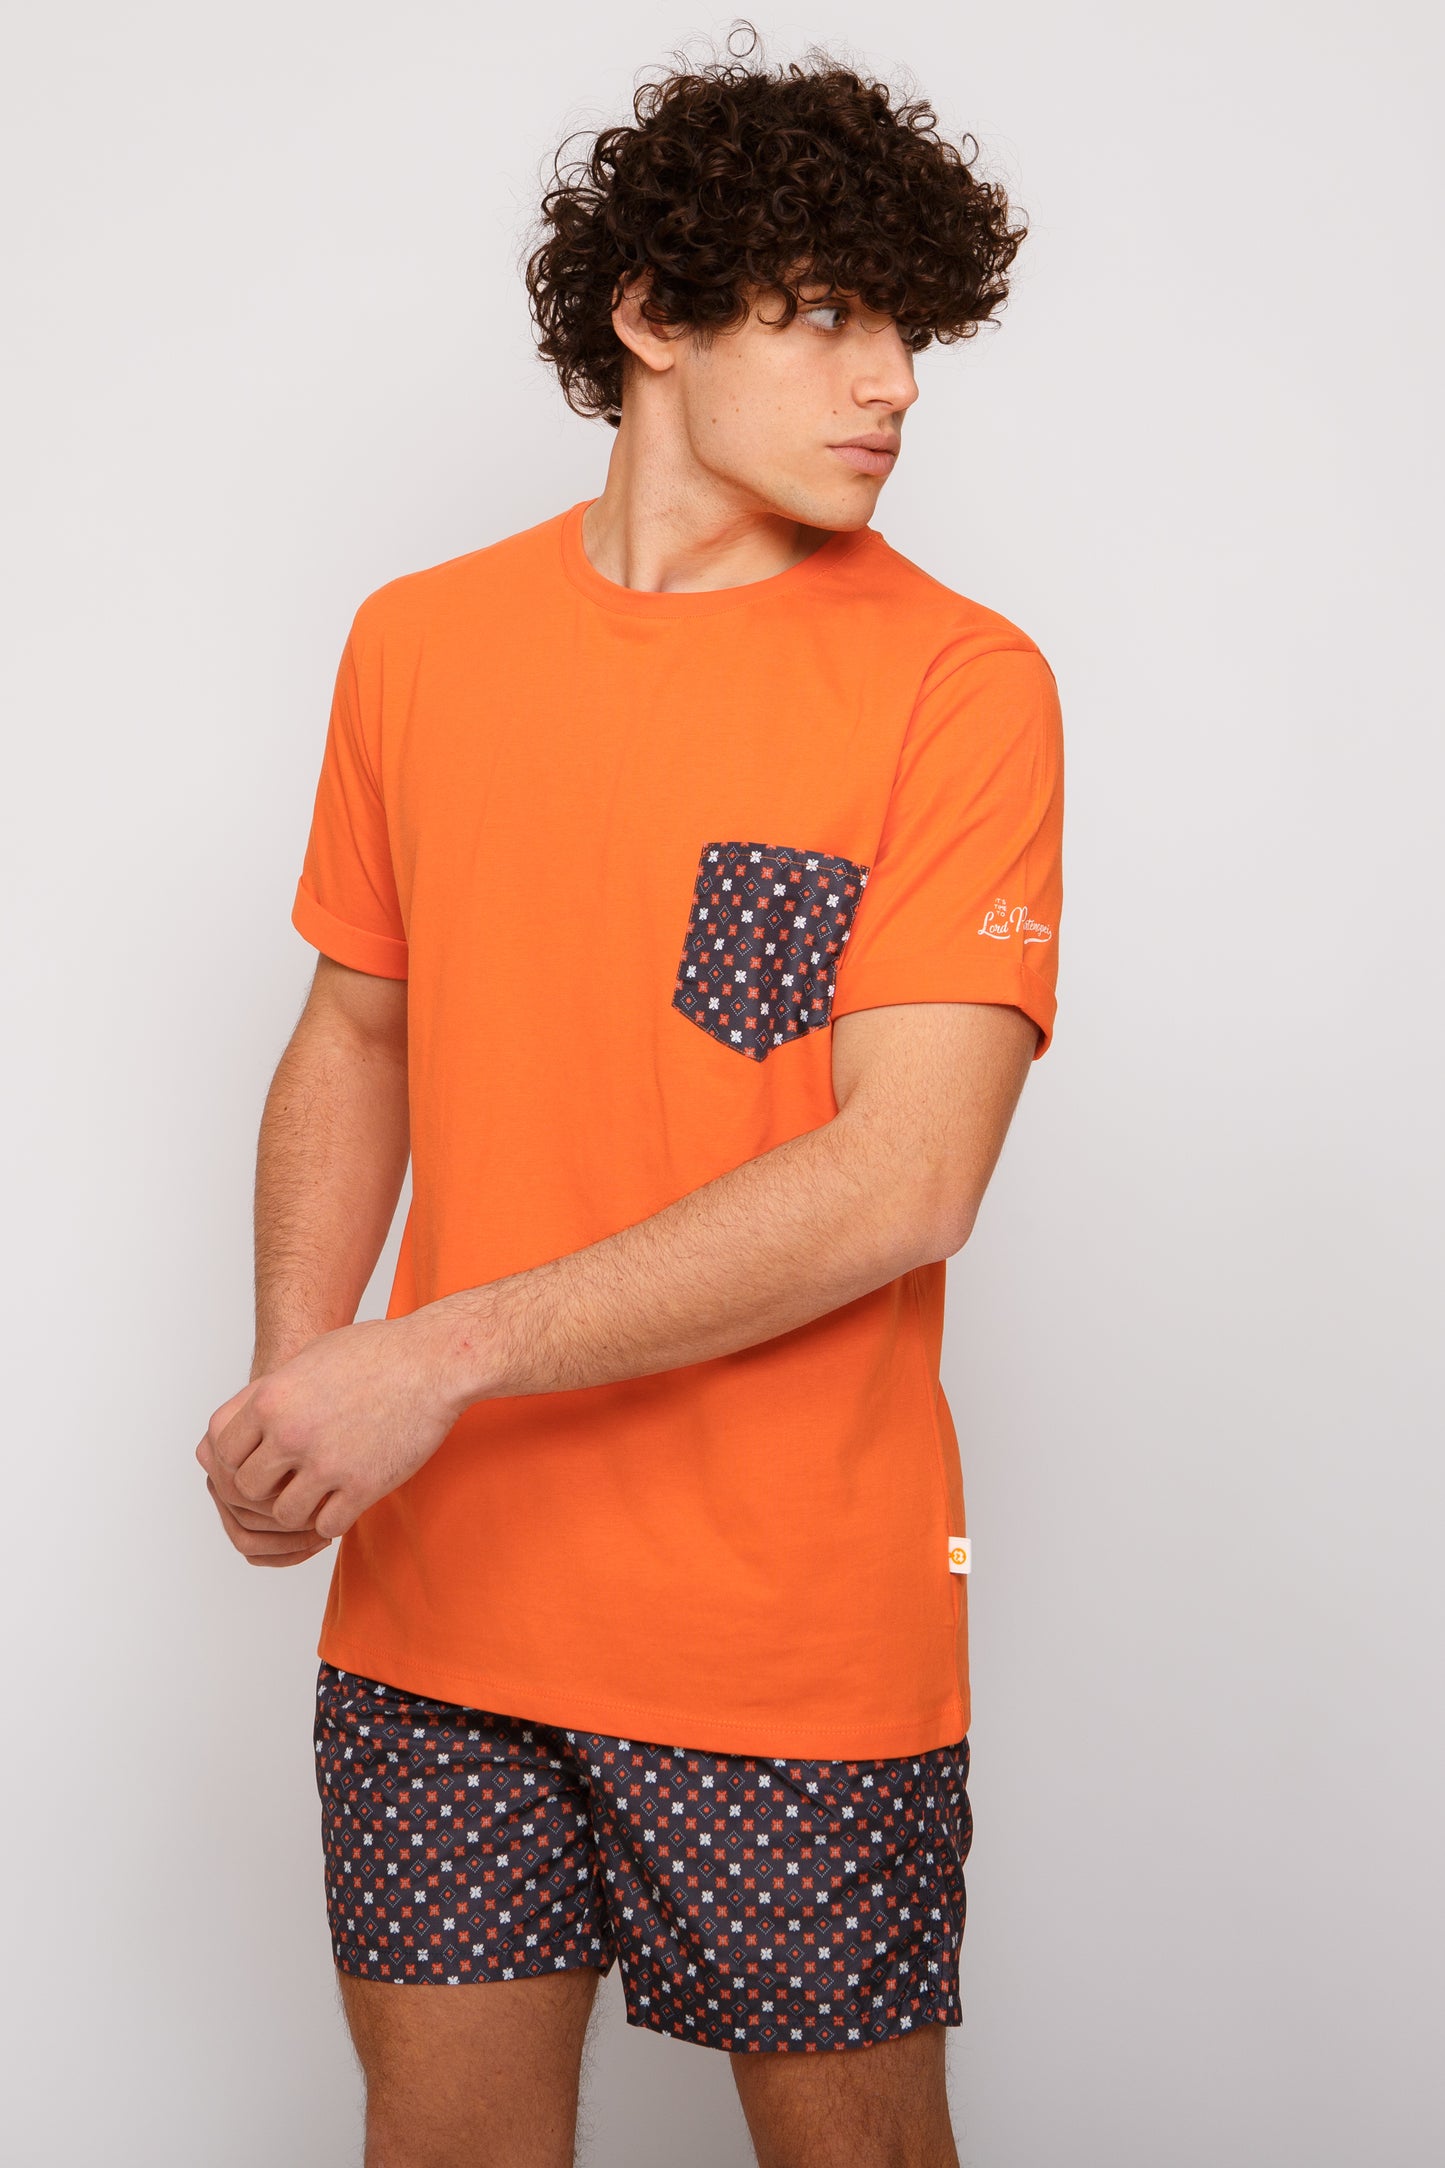 Micro - T-shirt arancio stampa micro